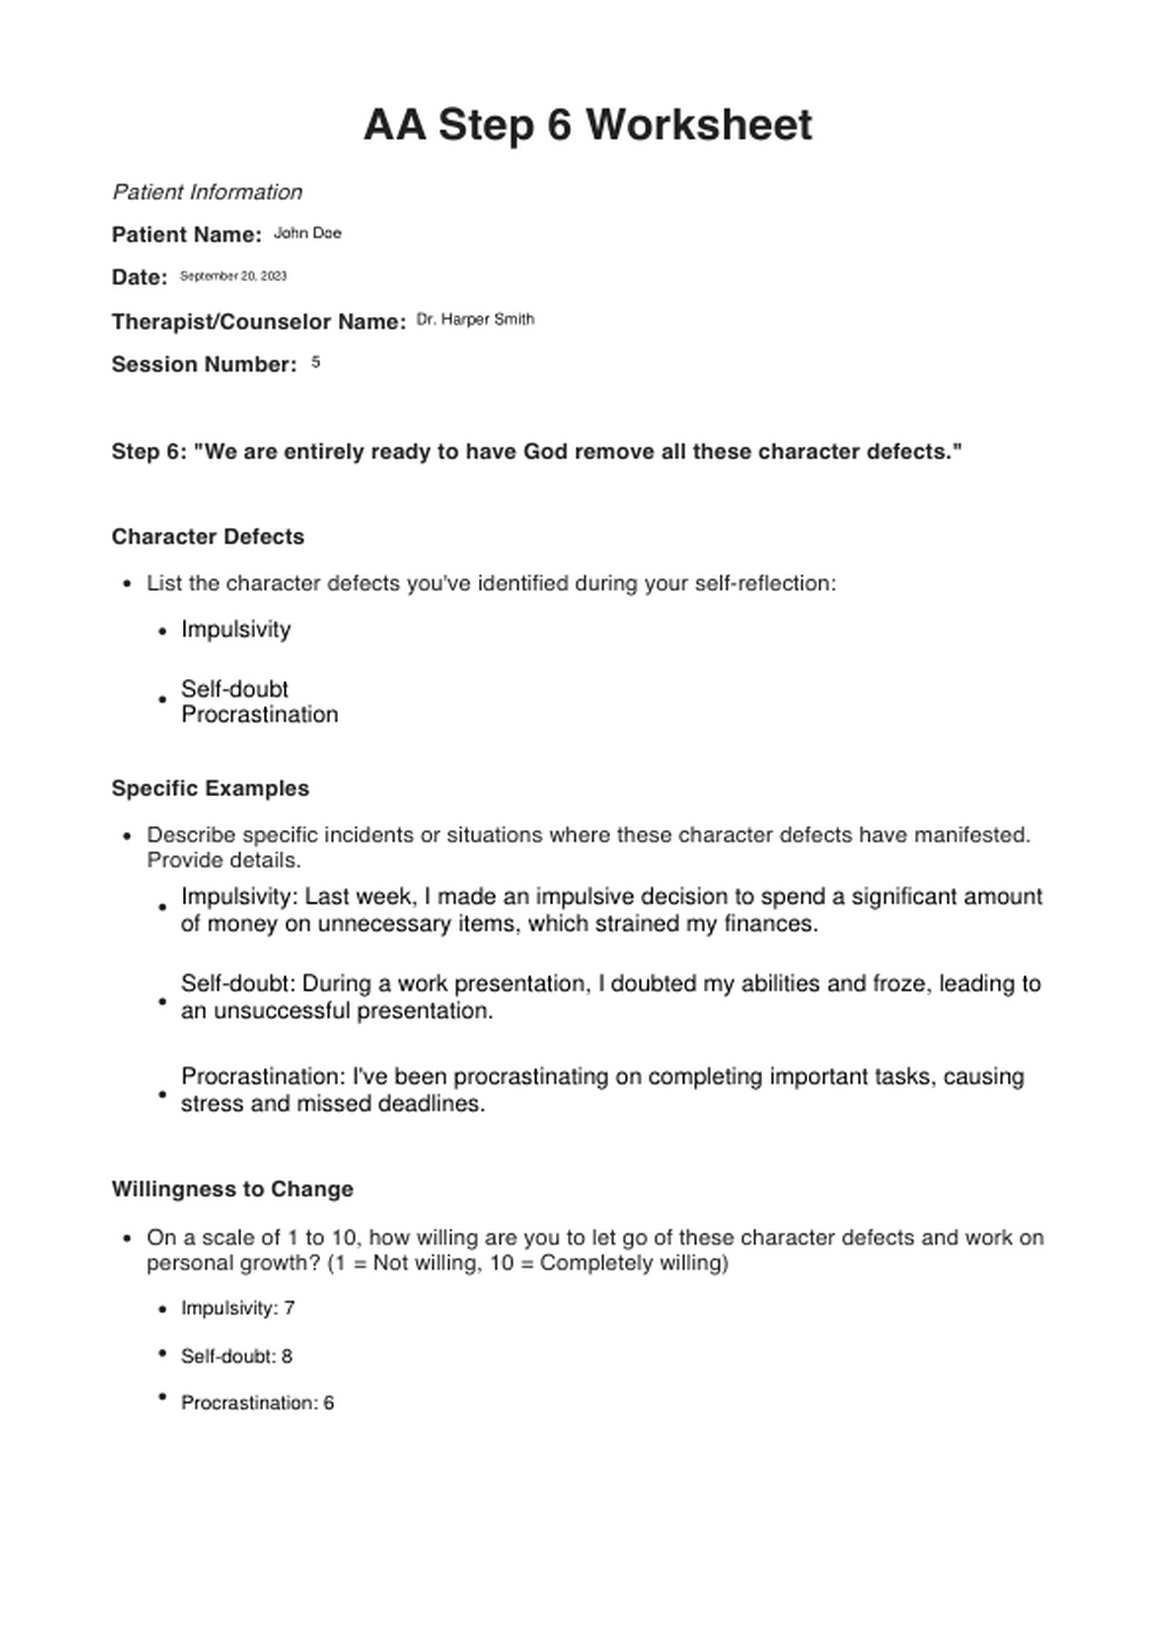 AA Step 6 Worksheets PDF Example